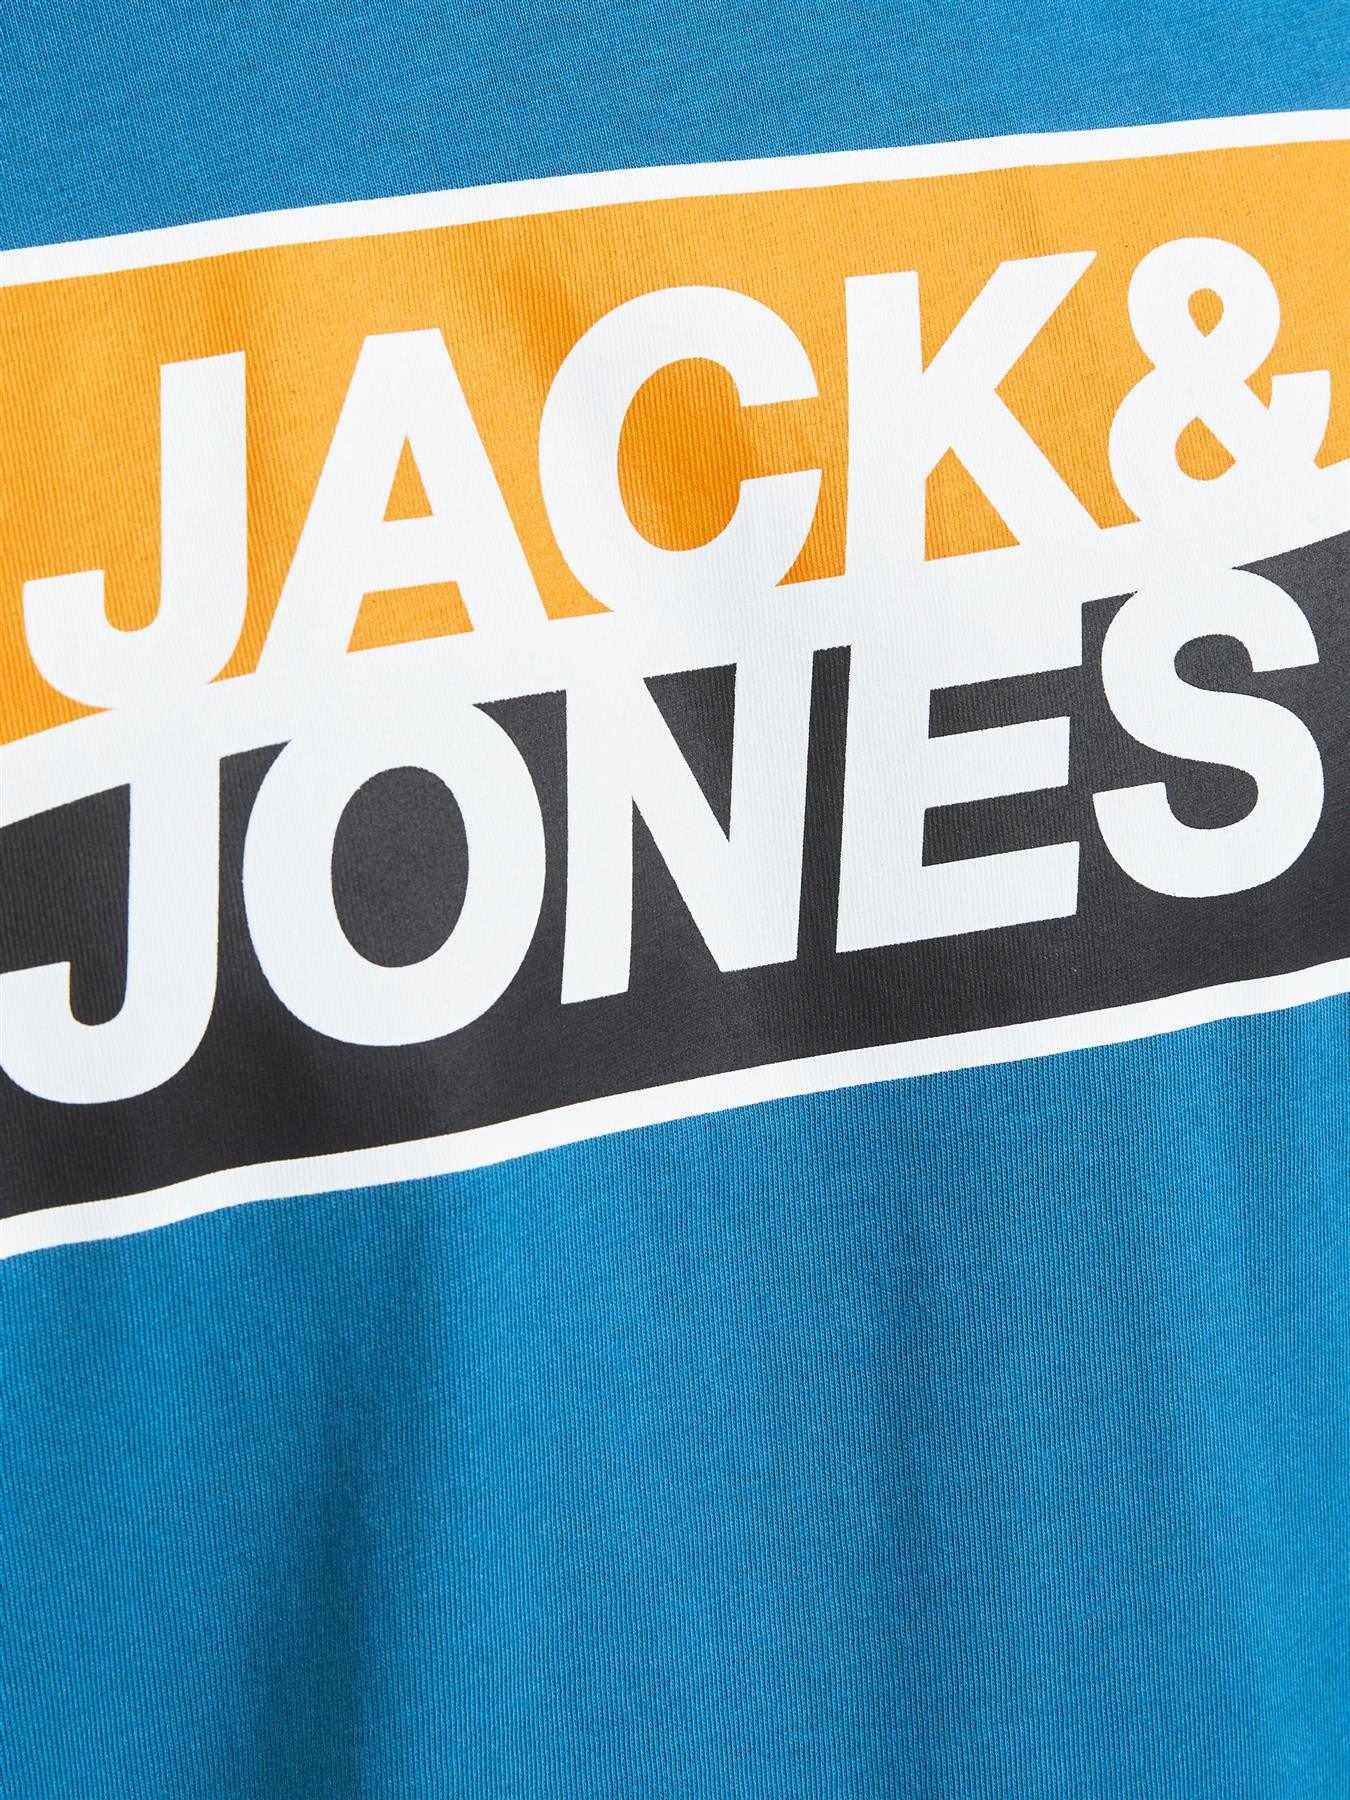 Jack & Jones Mens 'Fly' T-Shirt in Blue - VR2 Clothing